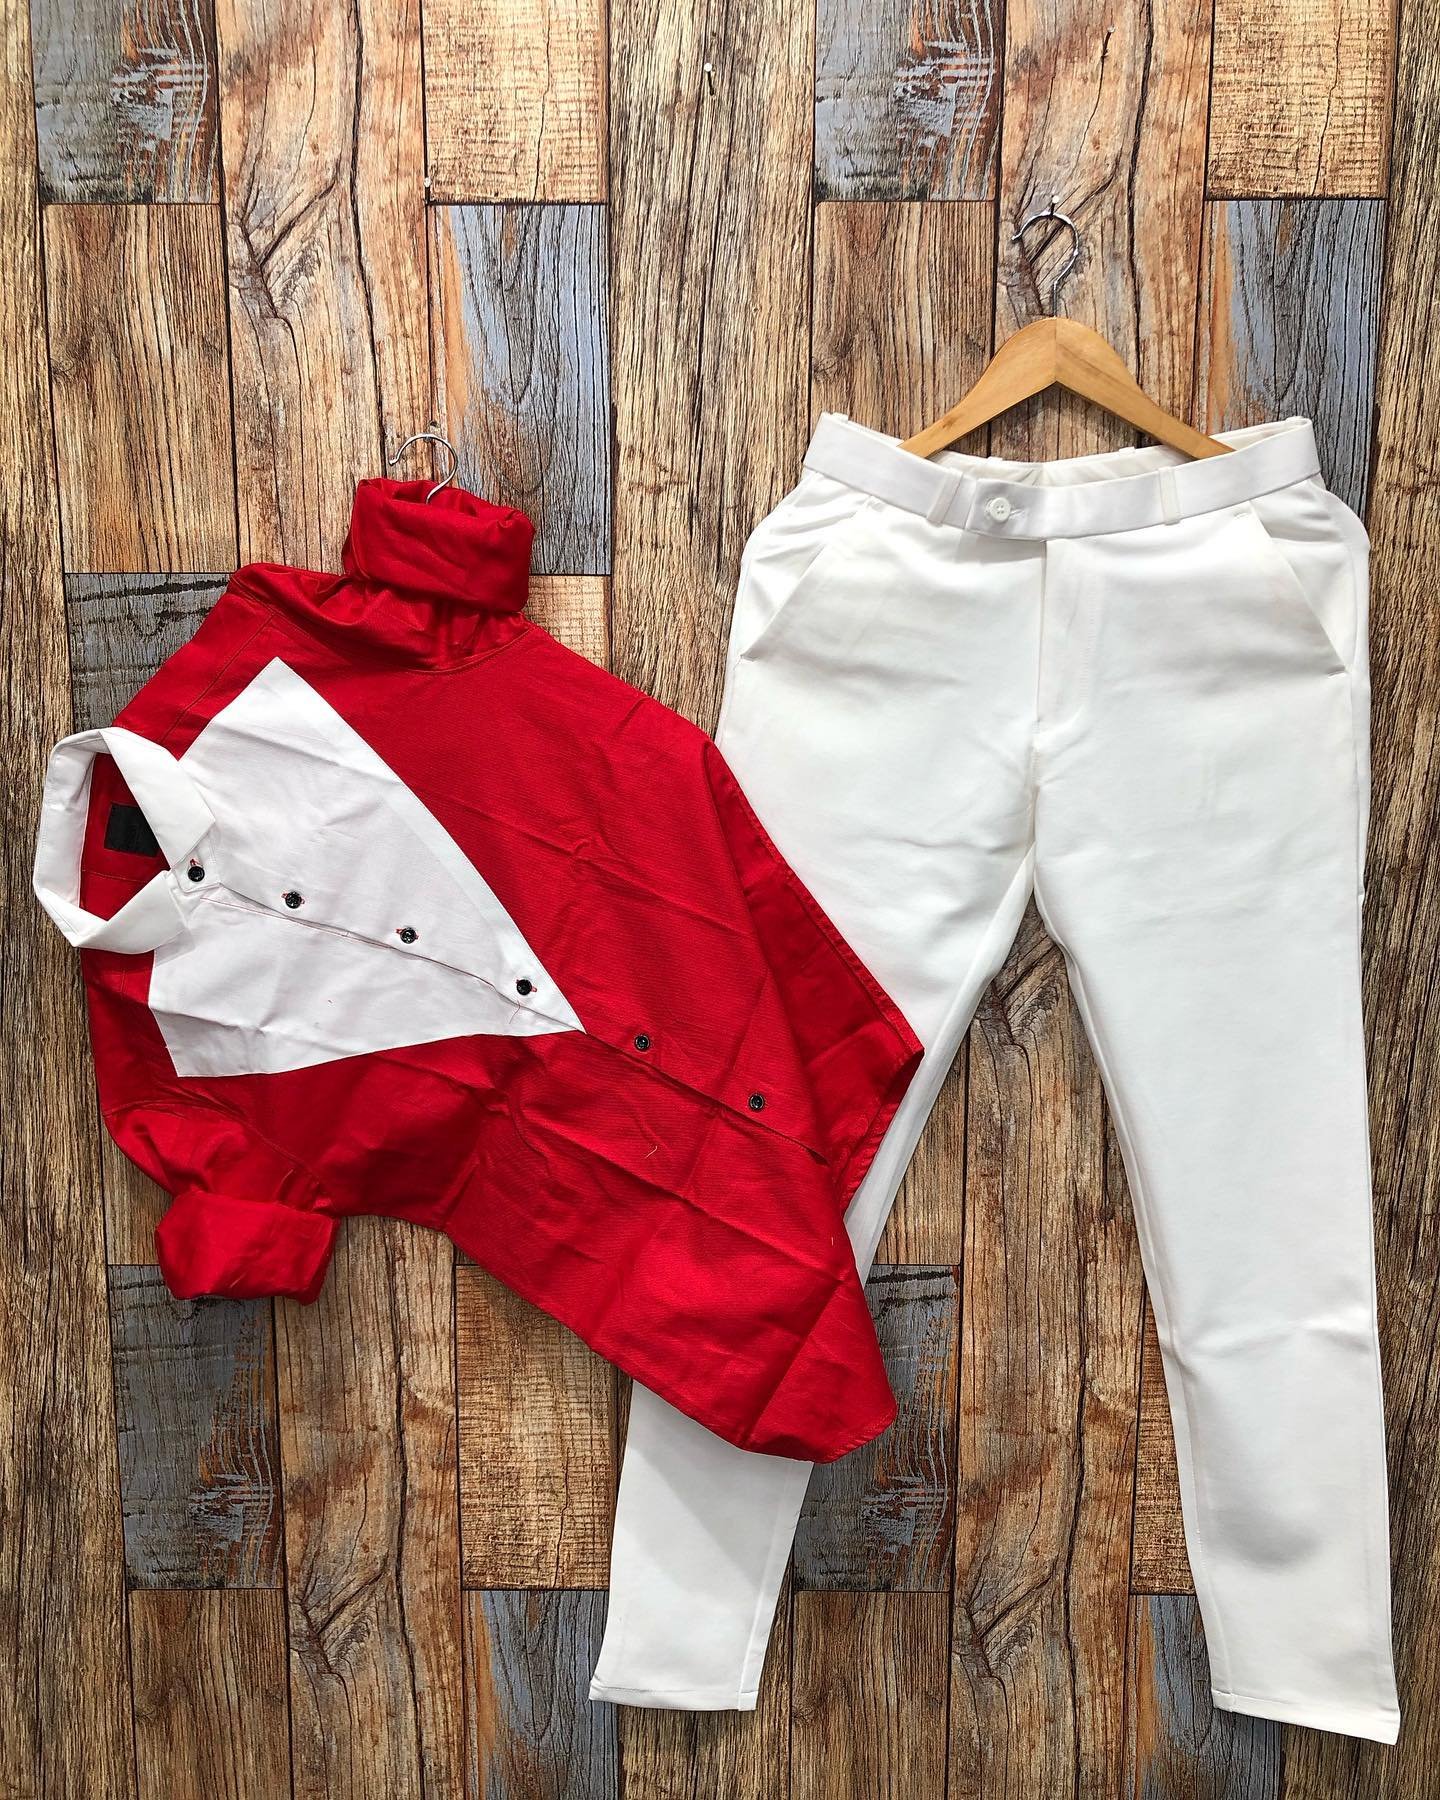 Designer Red Shirt and White Pants  Shoplyguys